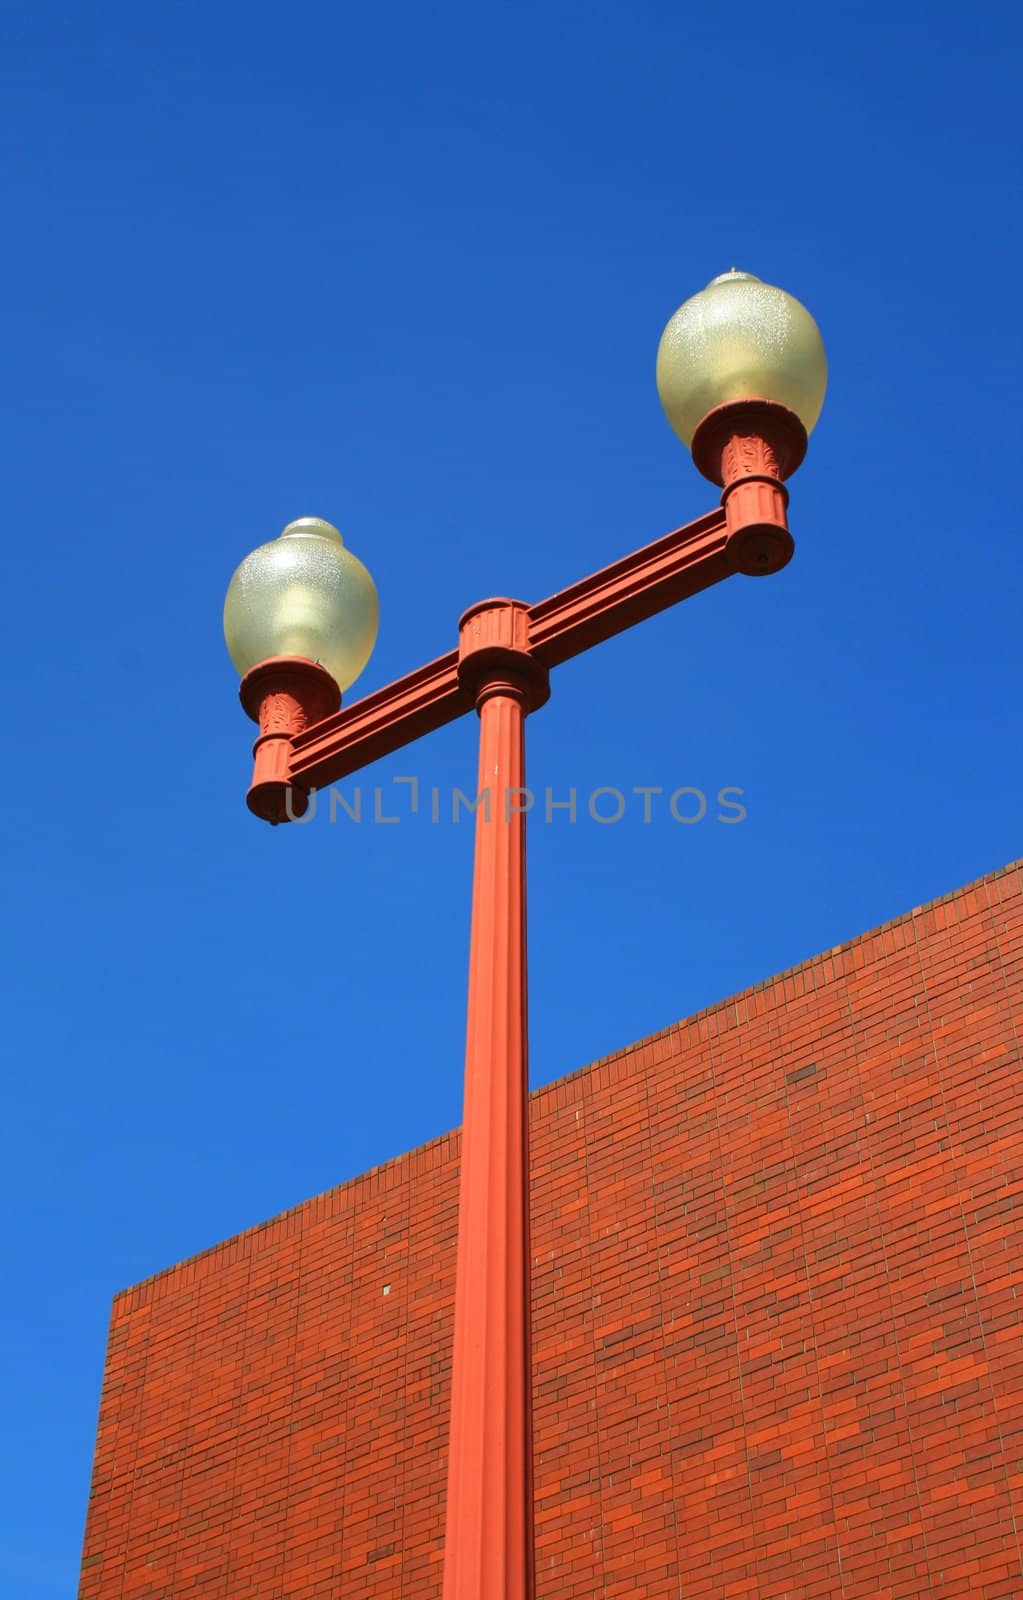 Street light pole next to a brick wall.
